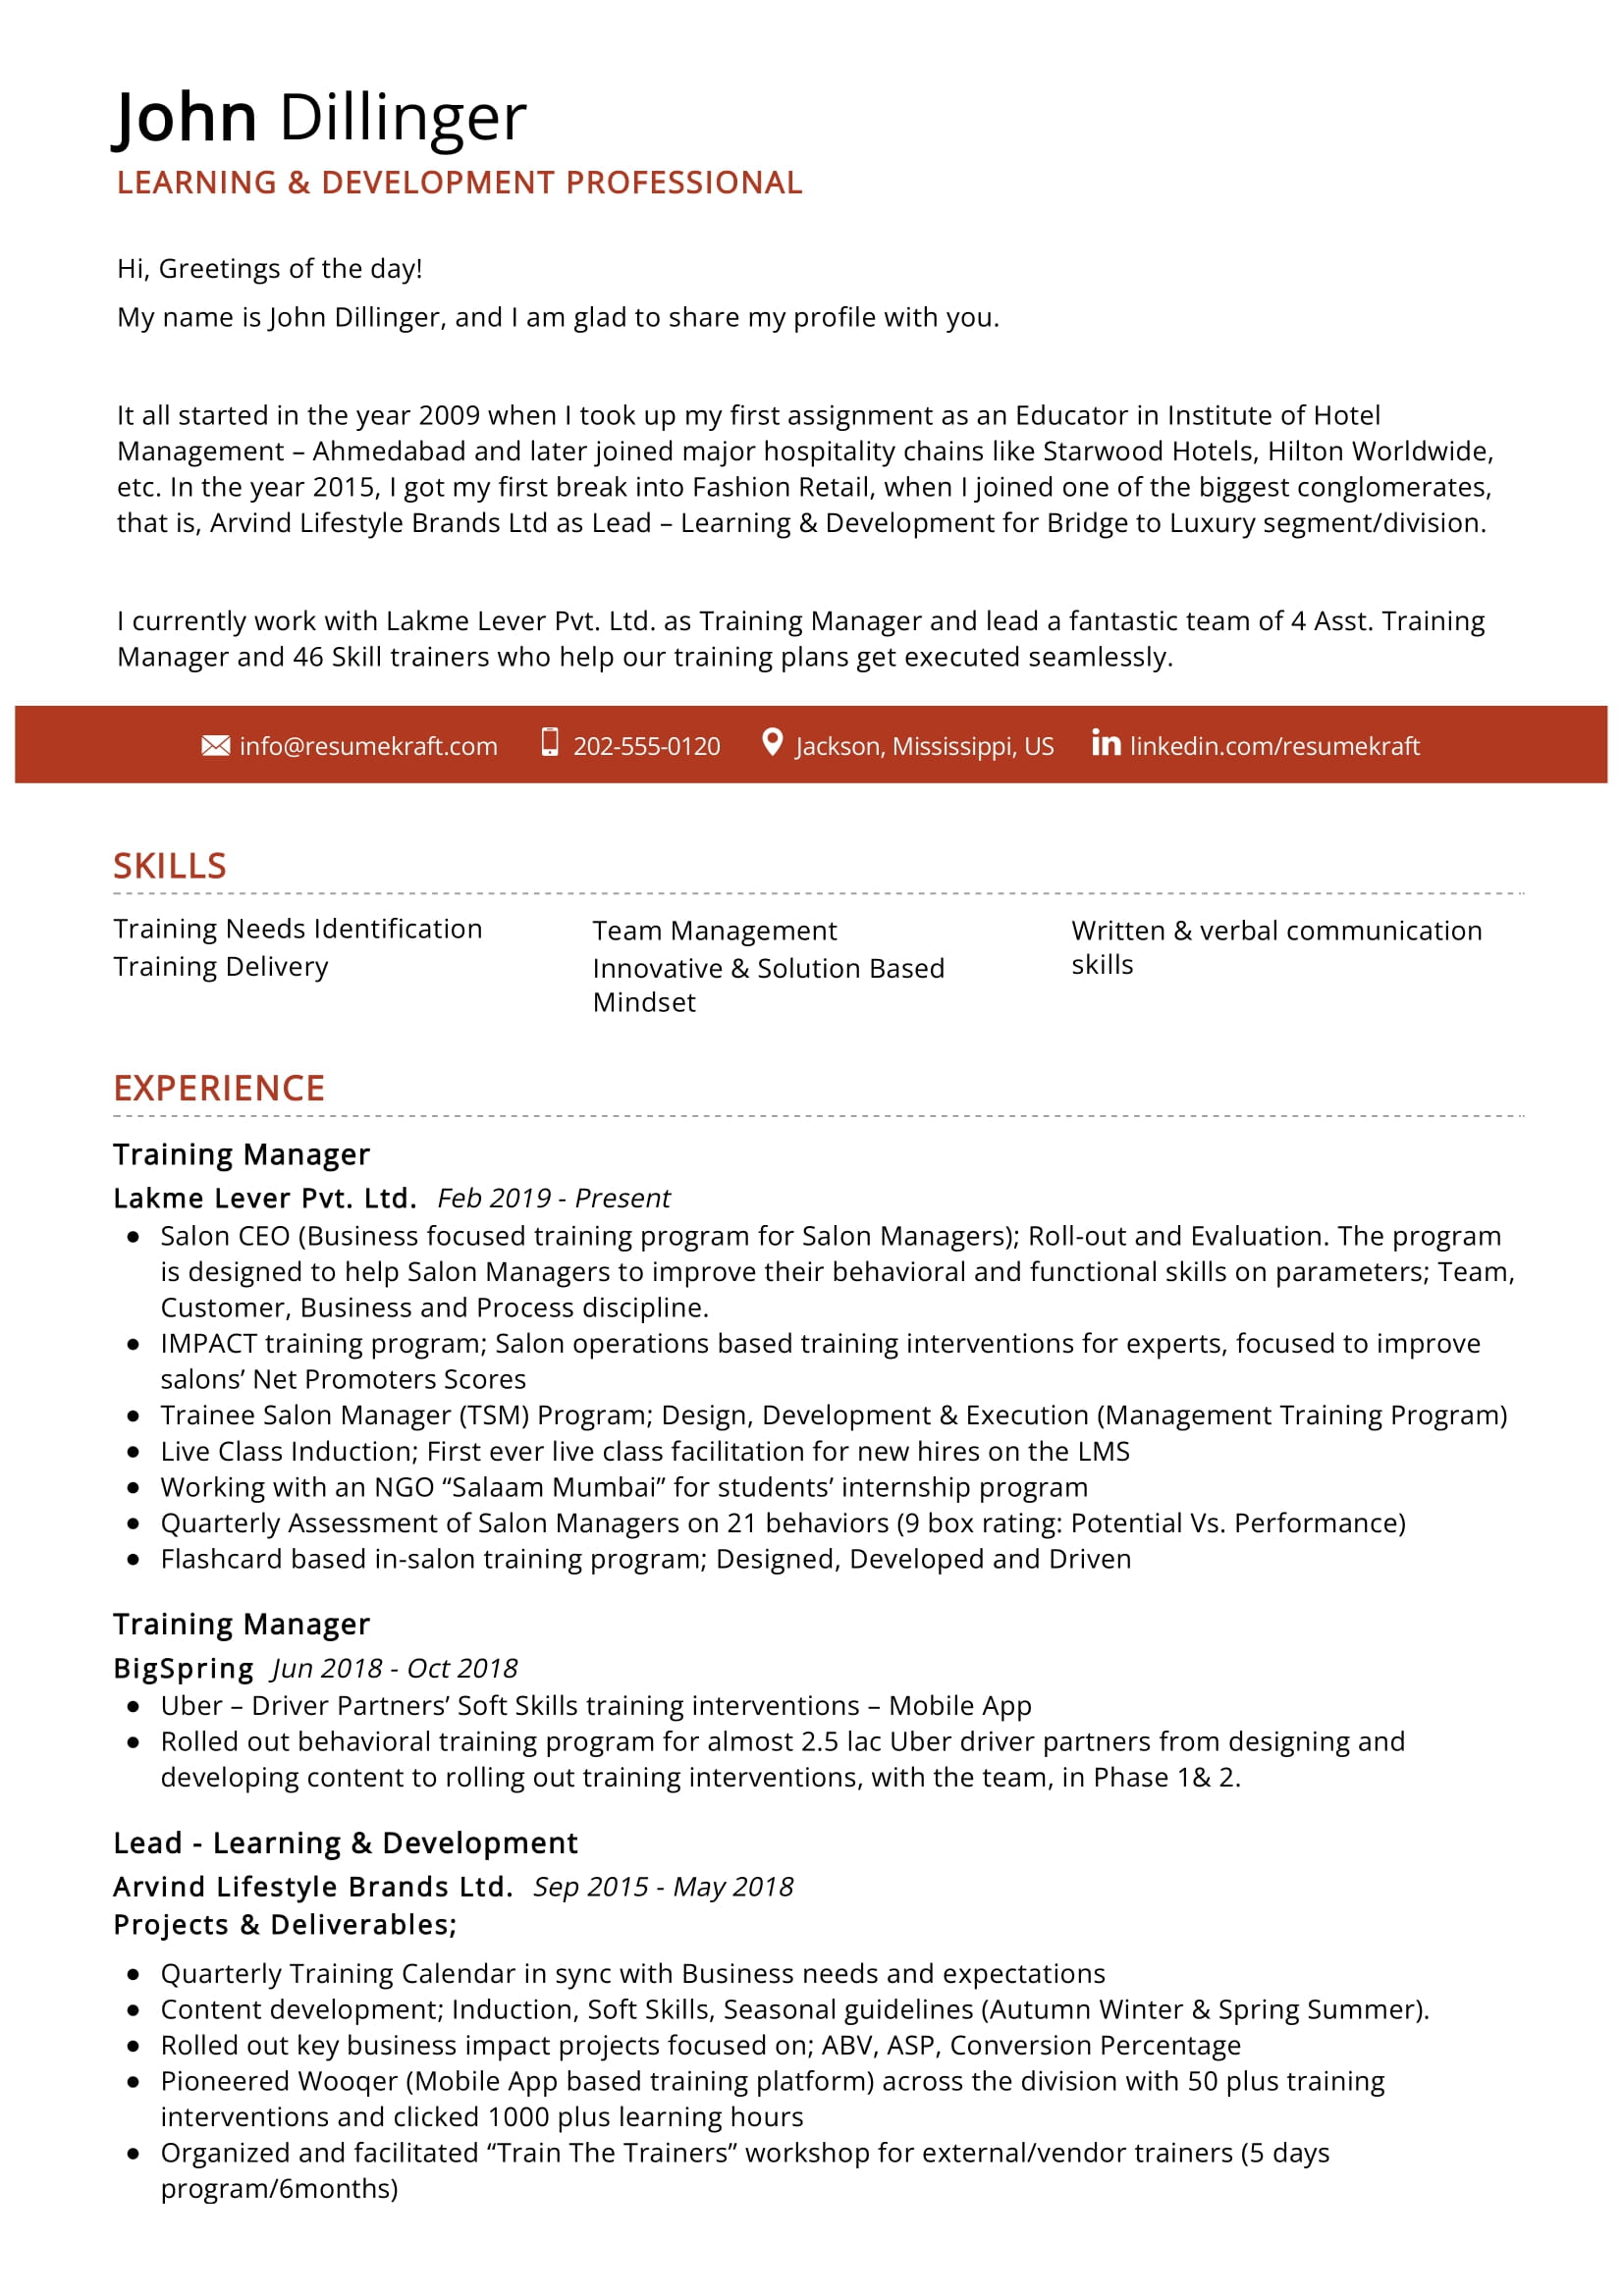 Learning & Development Professional Resume